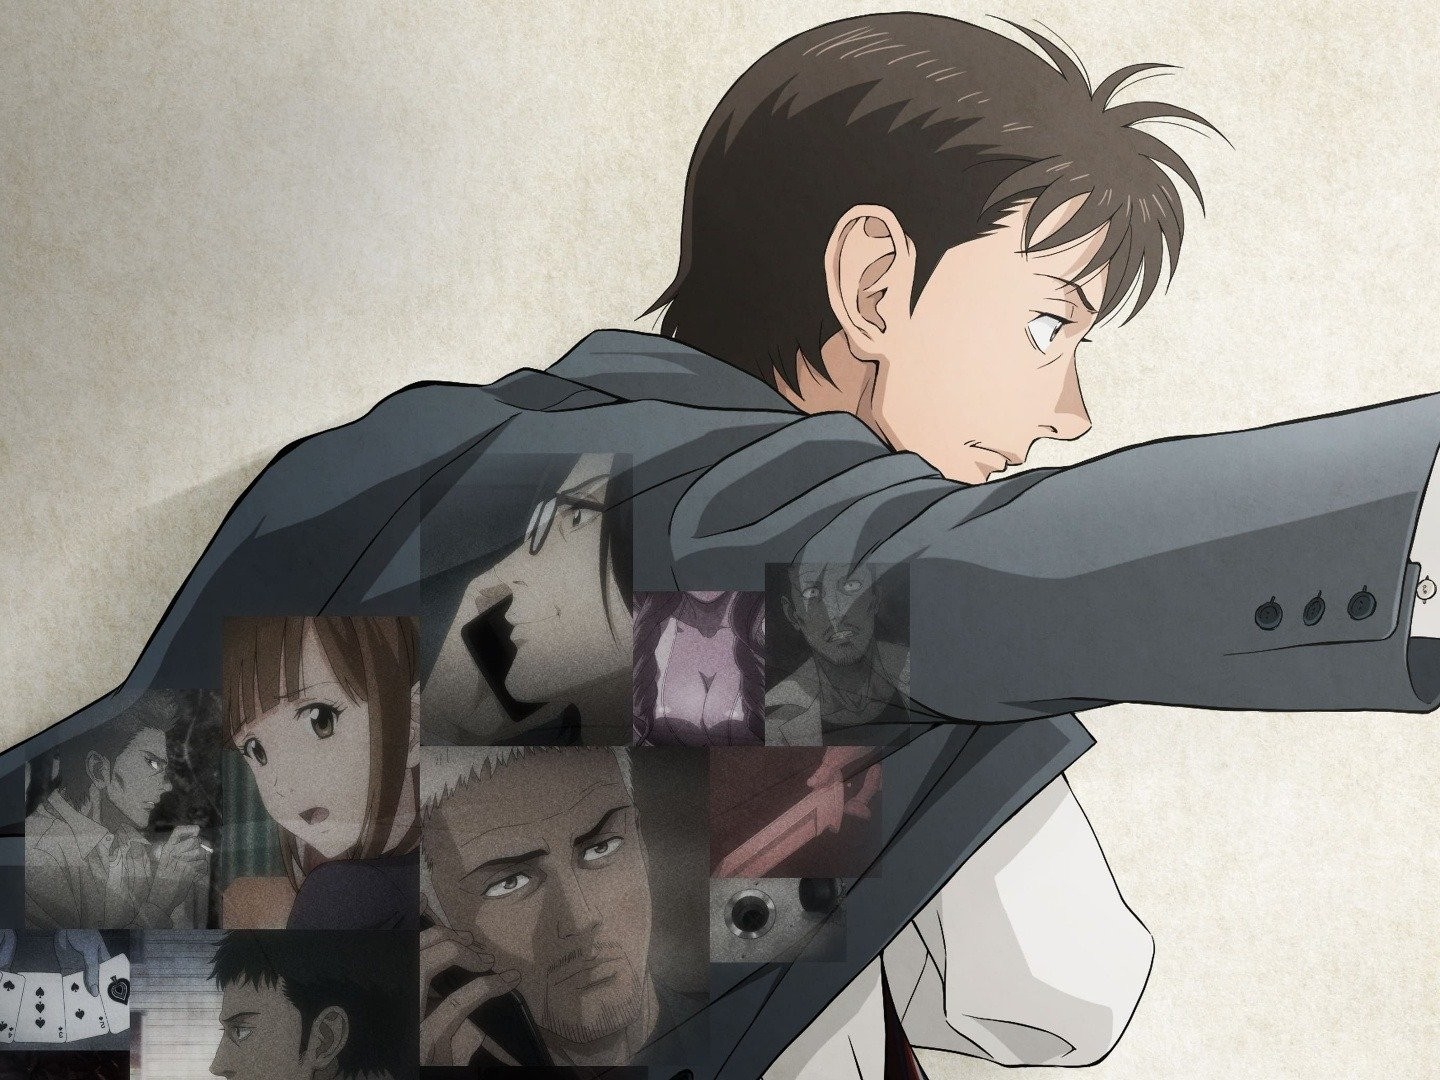 Inuyashiki - Last Hero: Season 1, Episode 7 - Rotten Tomatoes